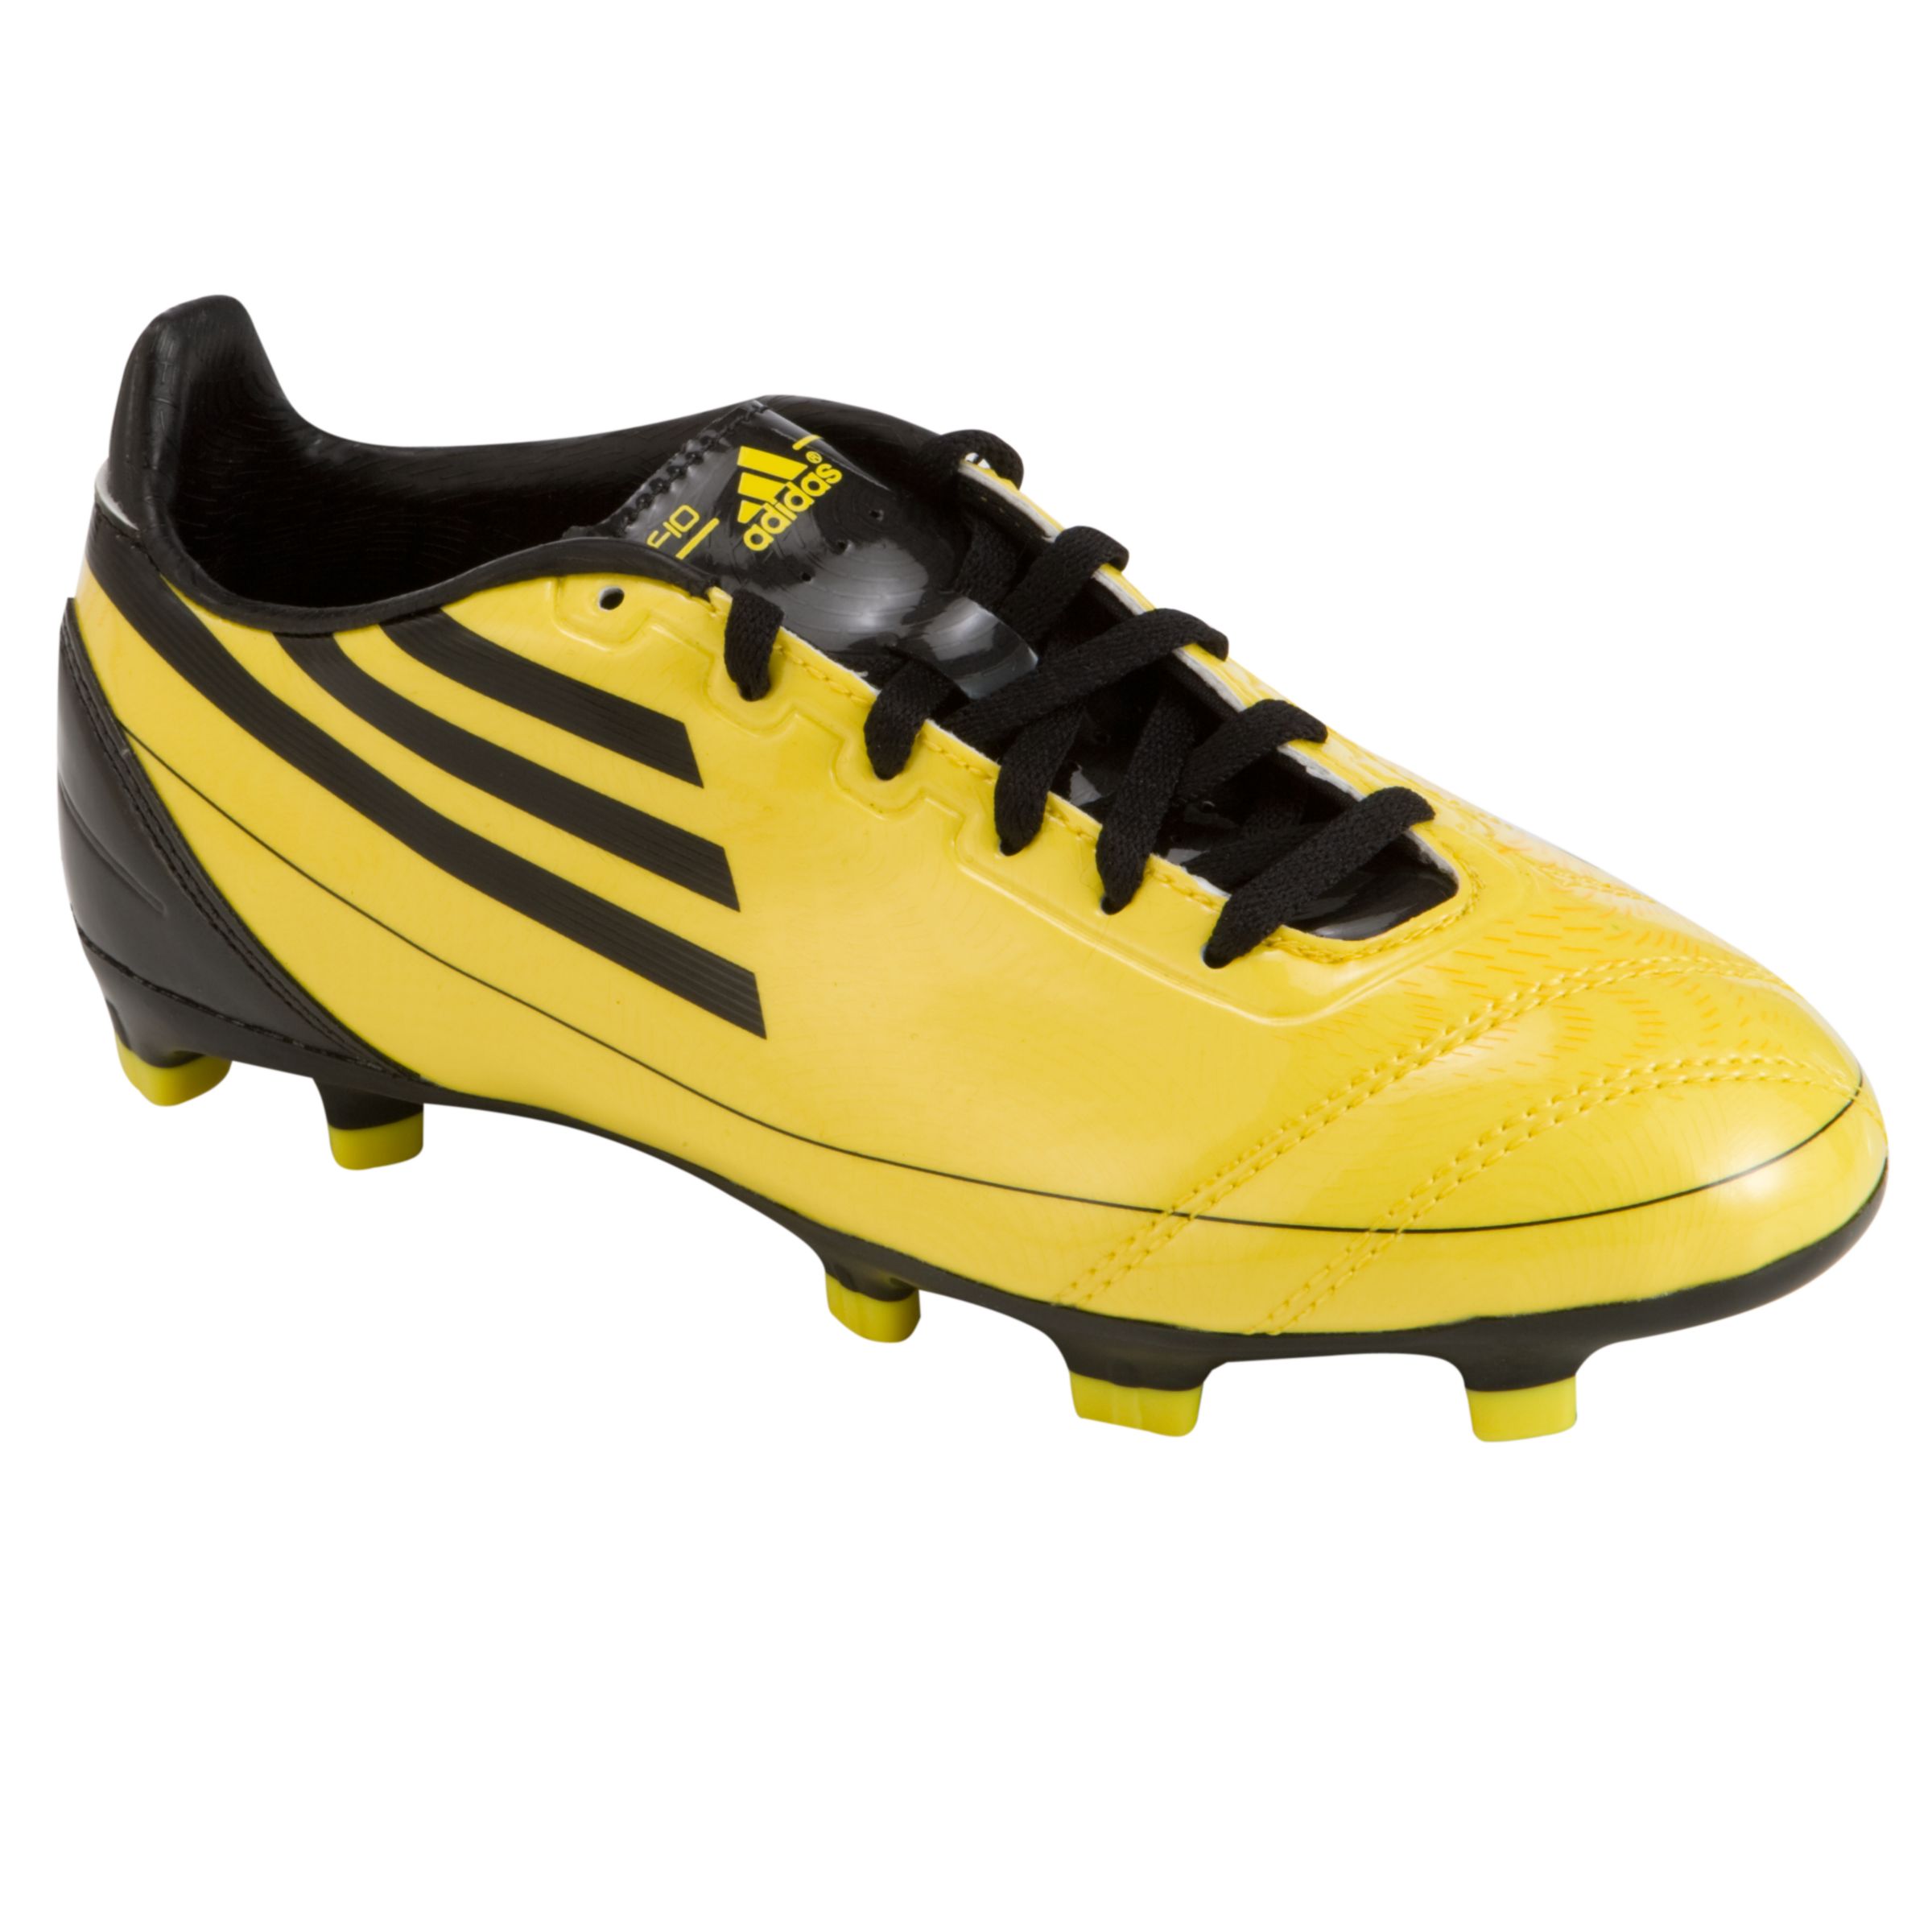 Adidas F10 TRX TF Football Boots, Yellow/black